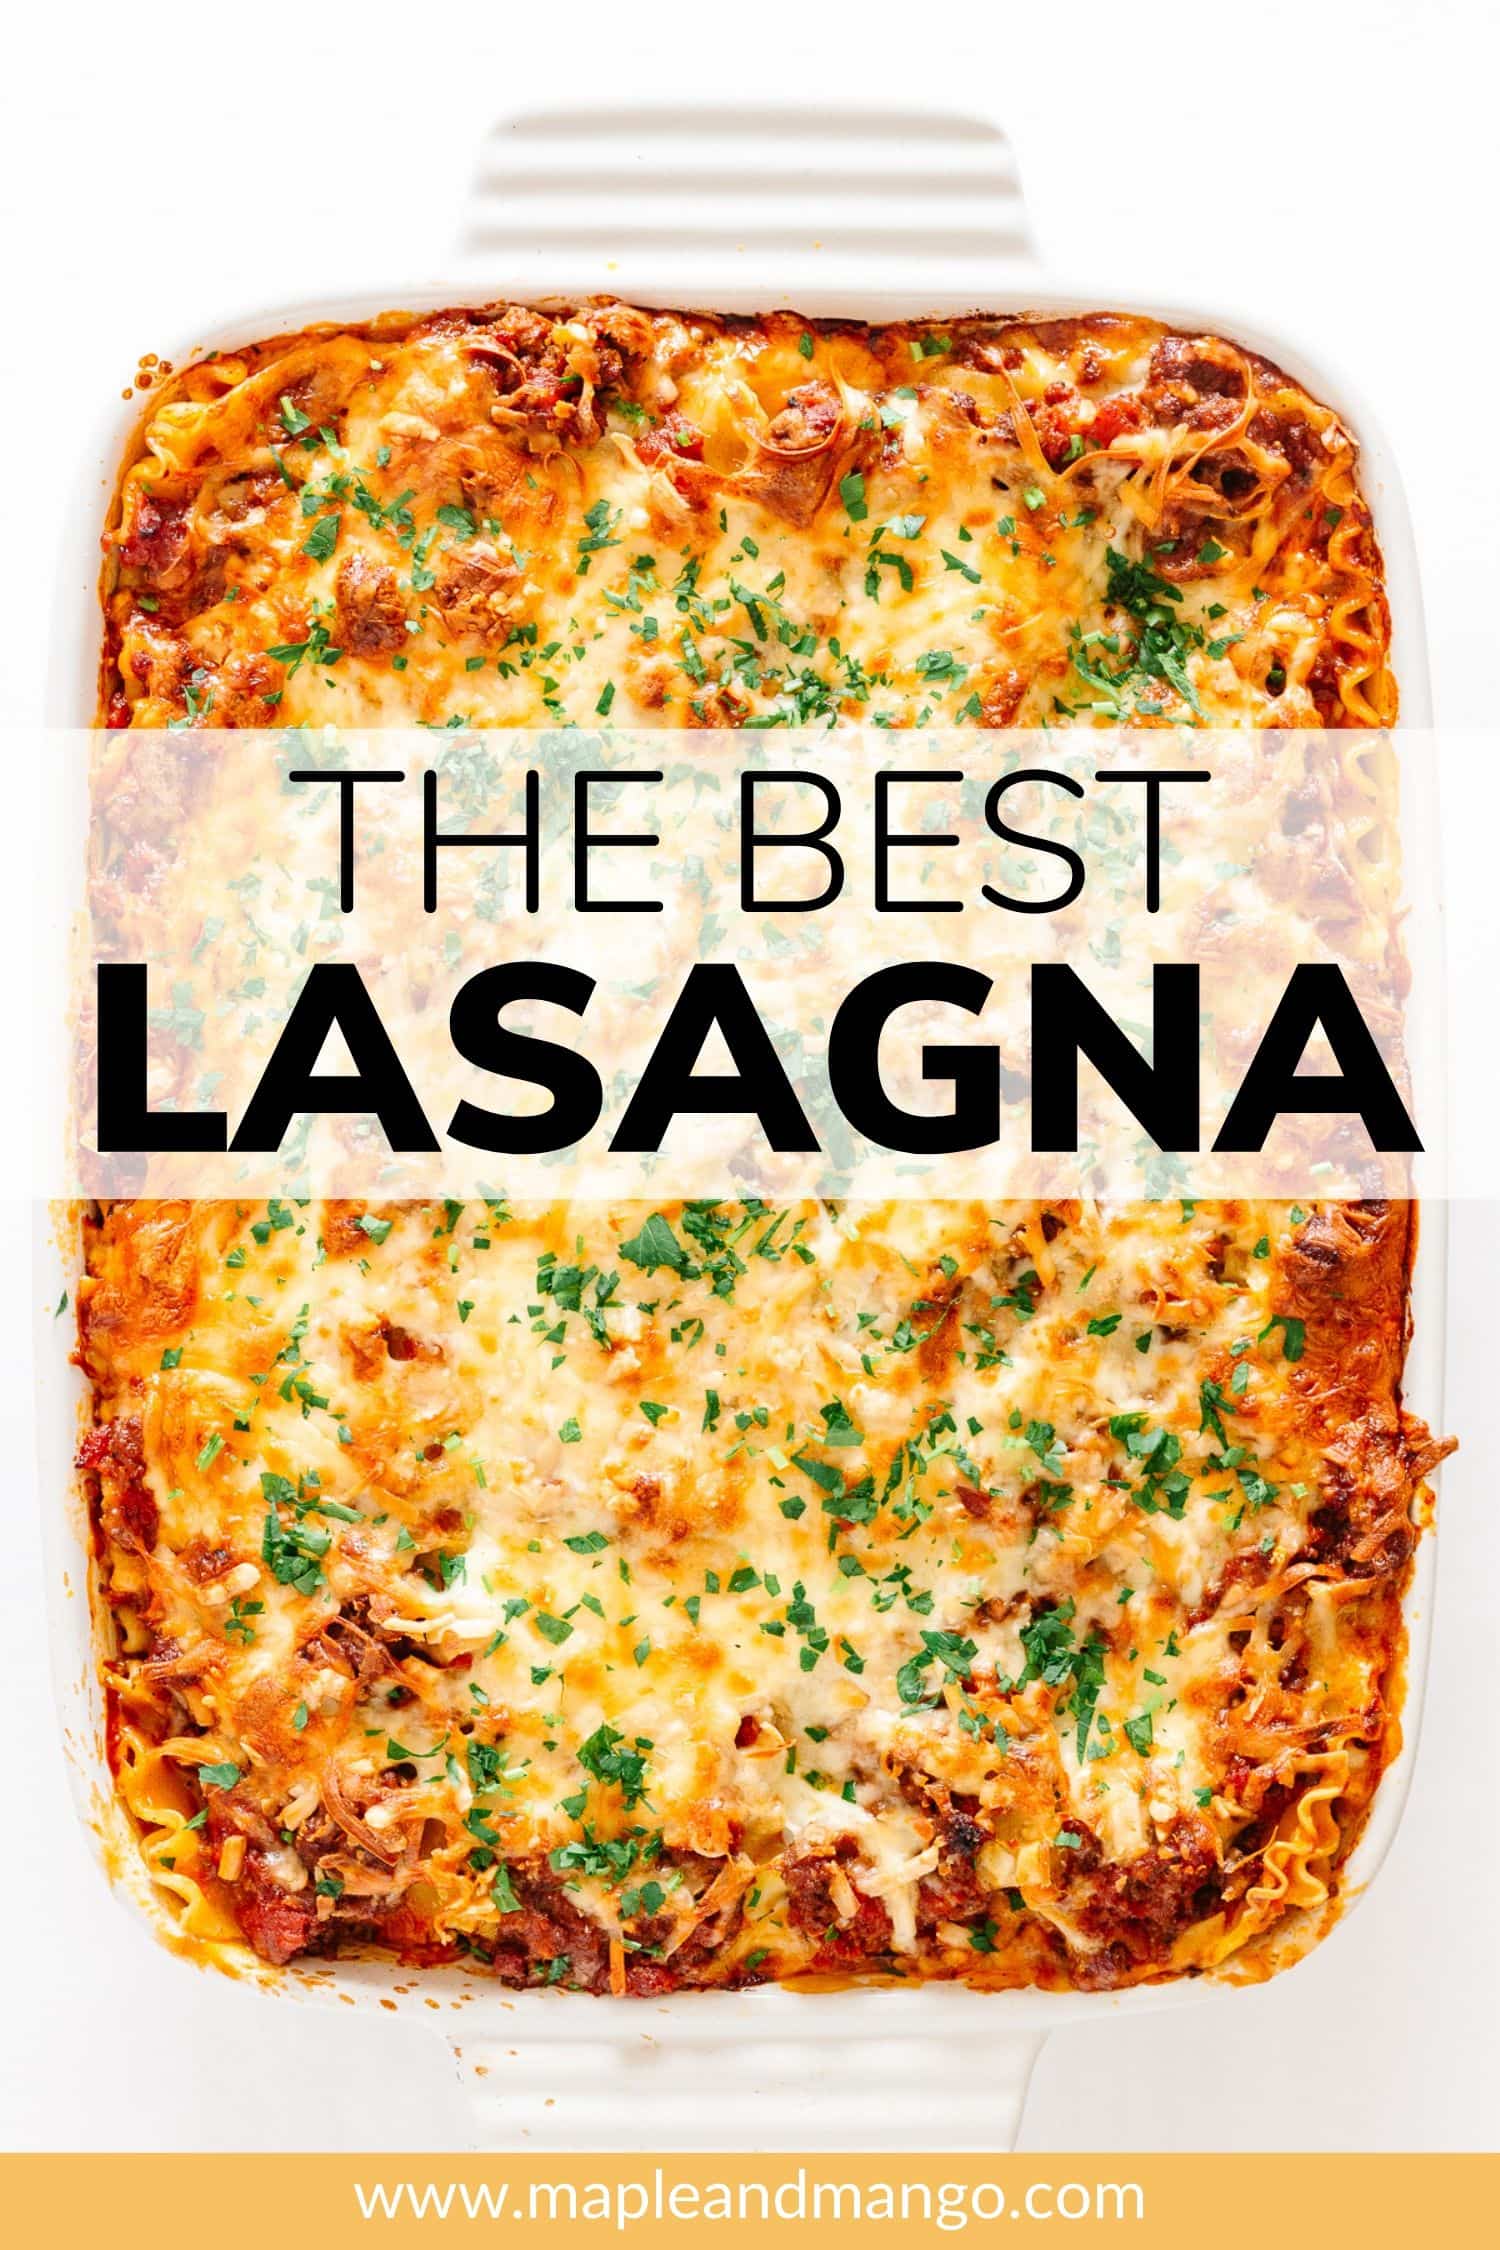 Pinterest image for "The Best Lasagna"